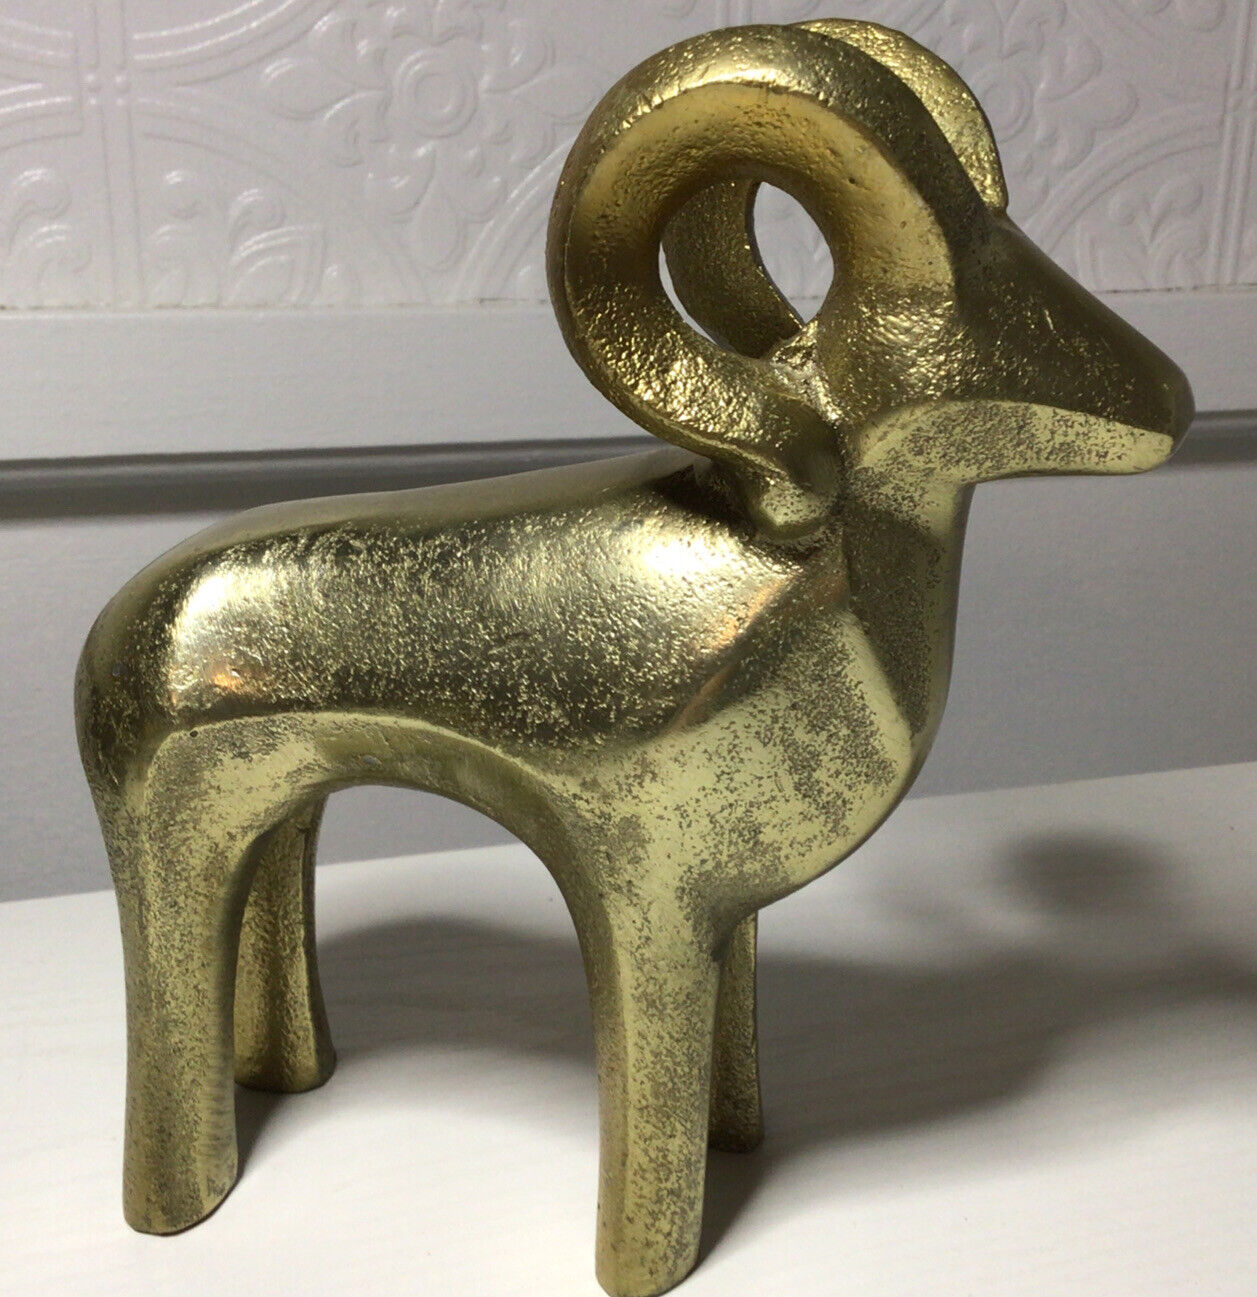 Brass Ram Figurine Vintage Mid Century Sleek Design Hollow Cast Unique Boho